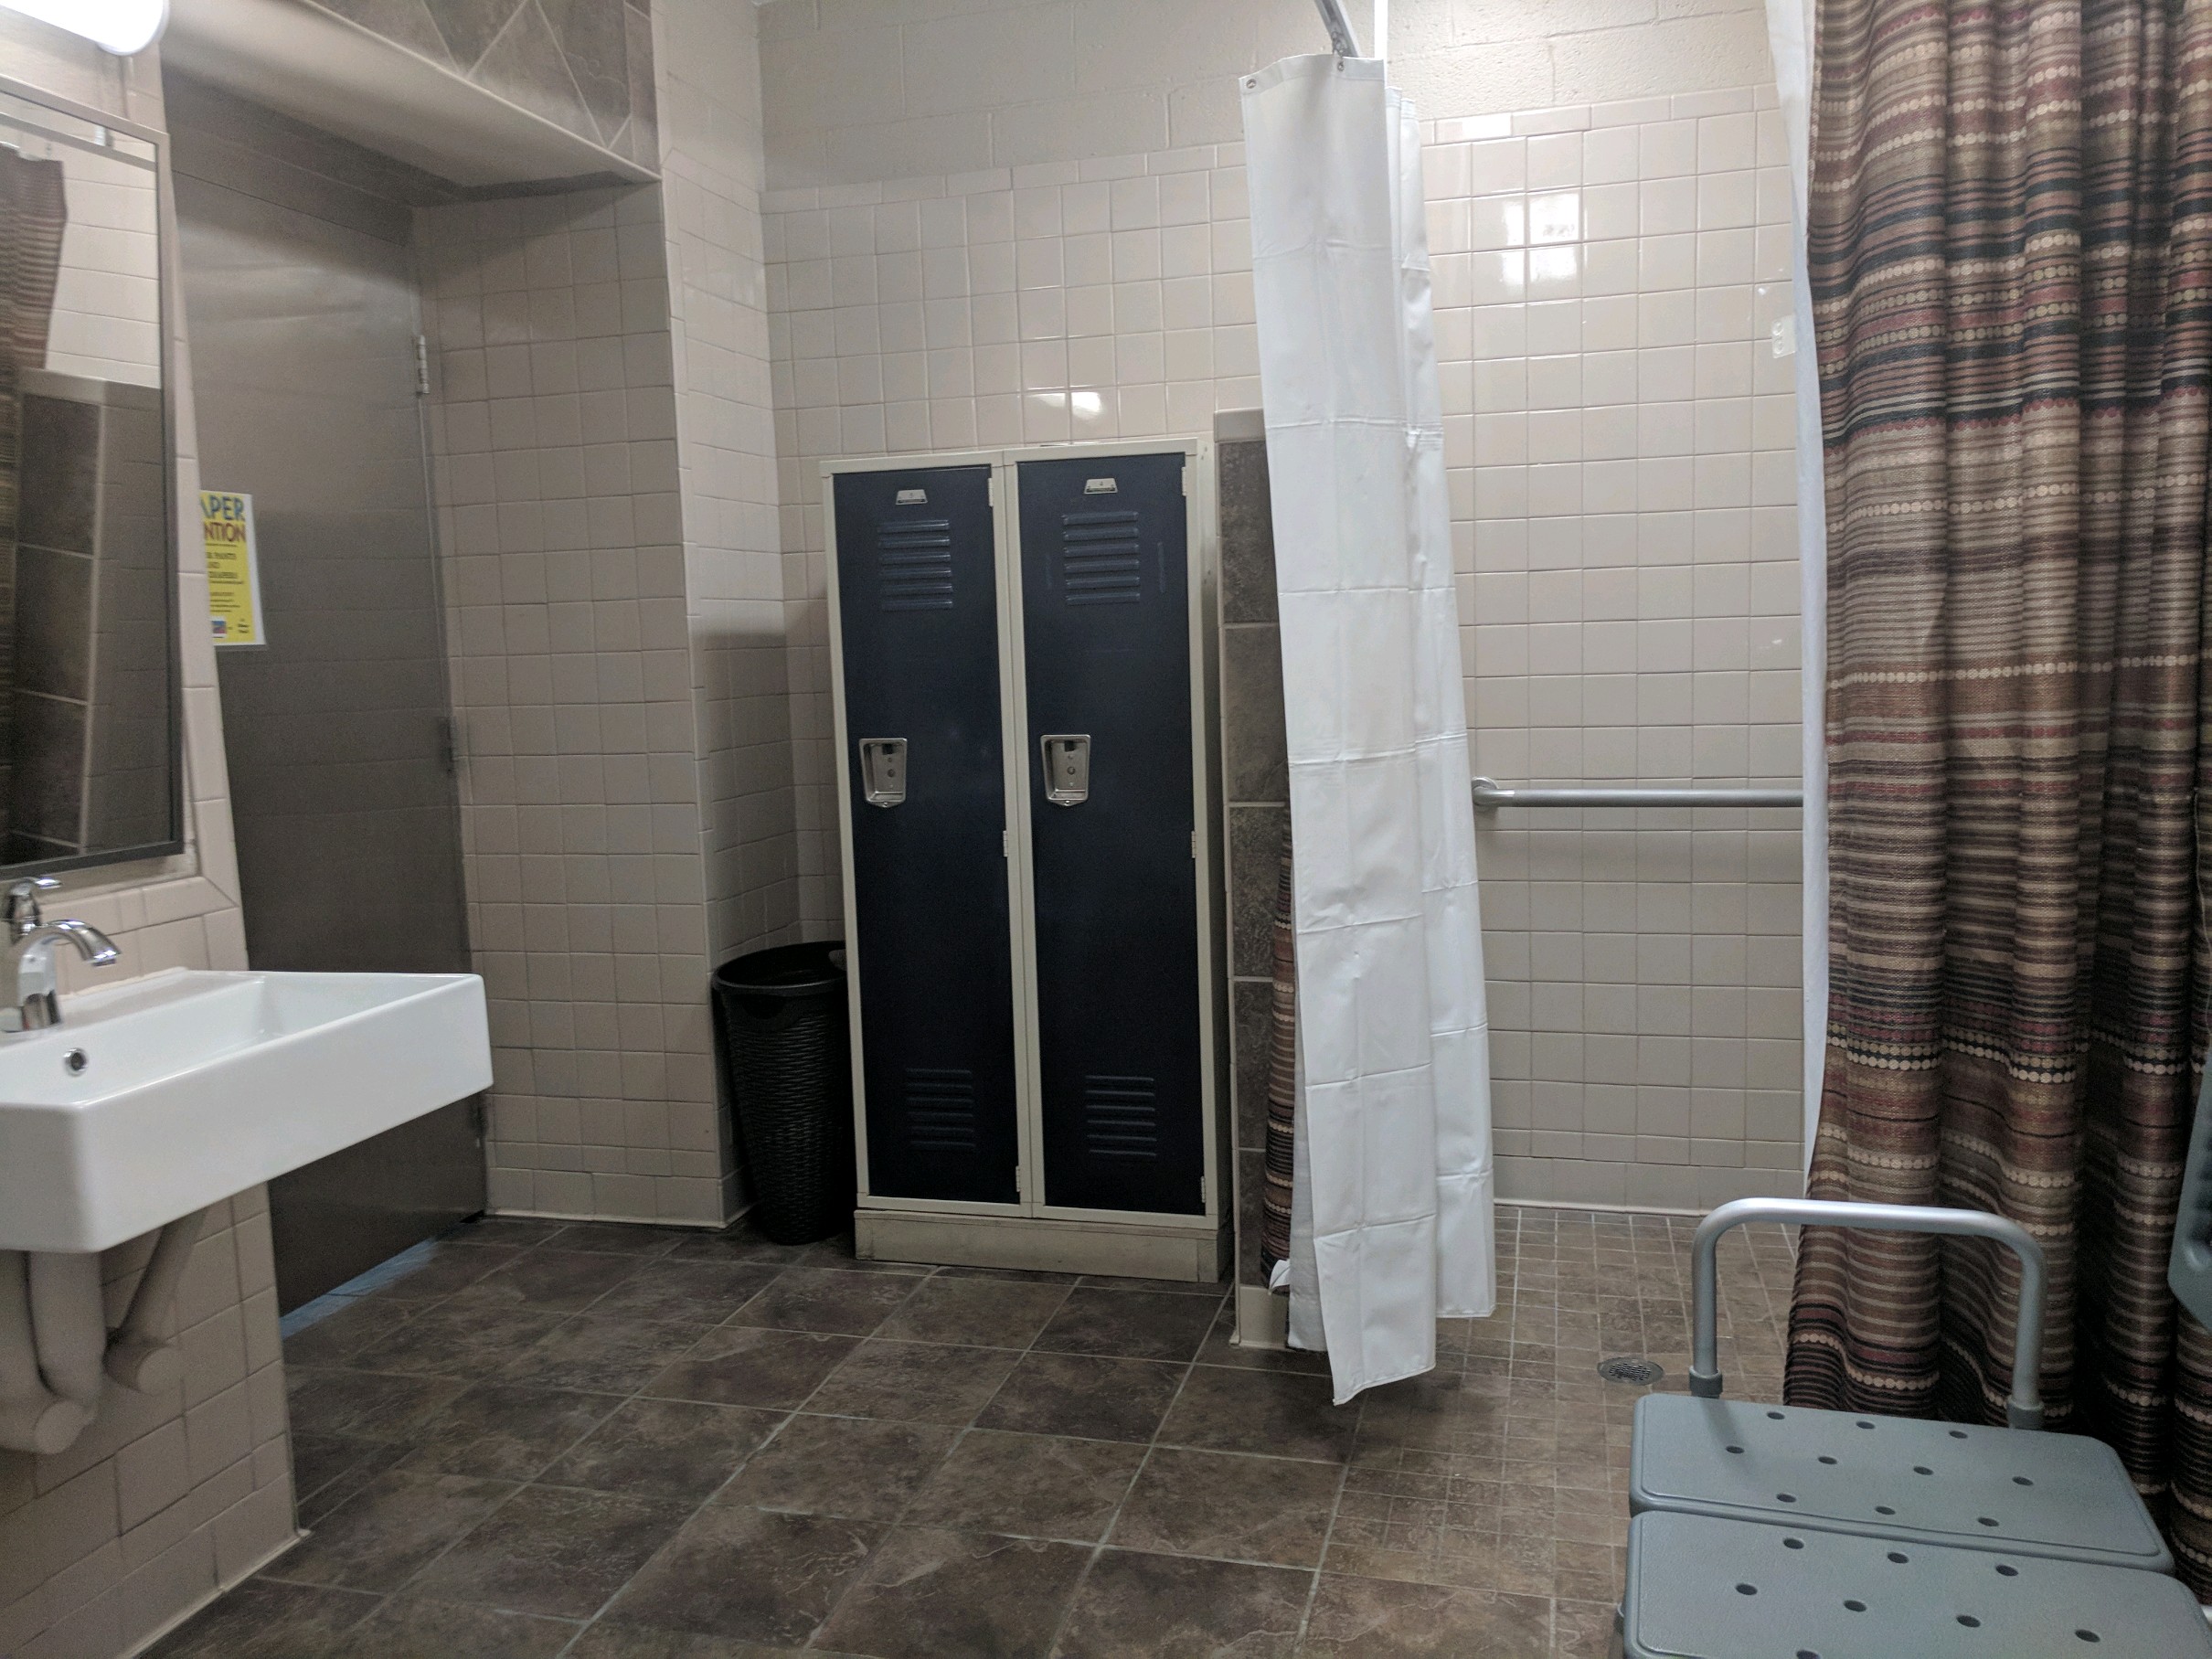 Special needs bathroom